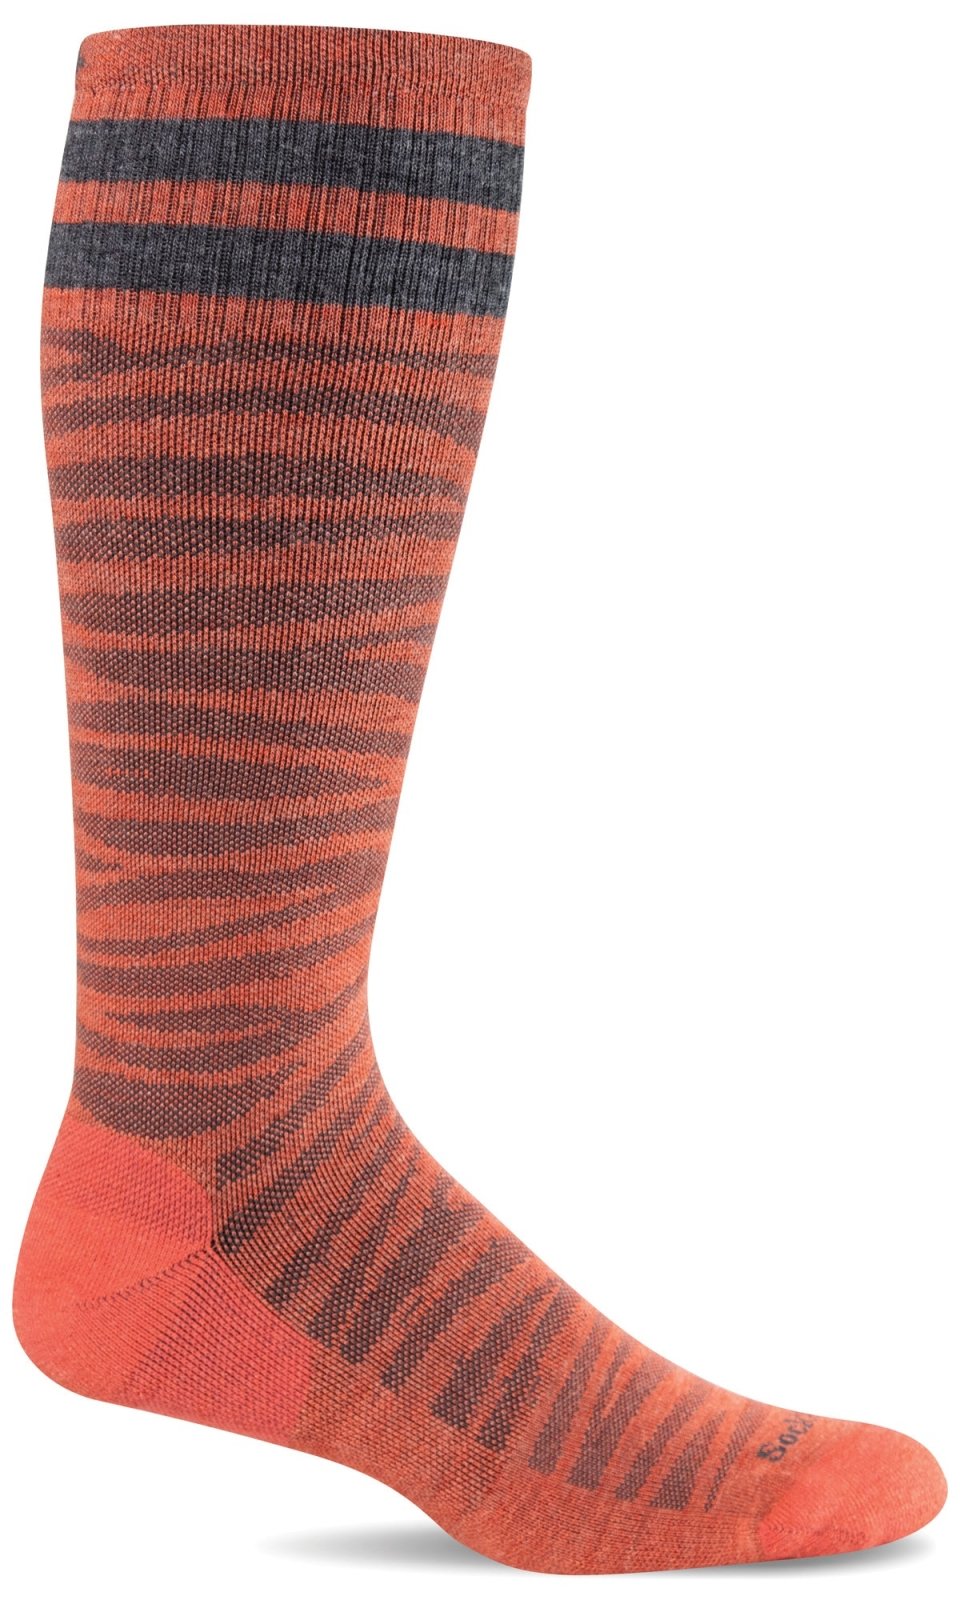 Women's Tigress | Firm Graduated Compression Socks - Merino Wool Lifestyle Compression - Sockwell